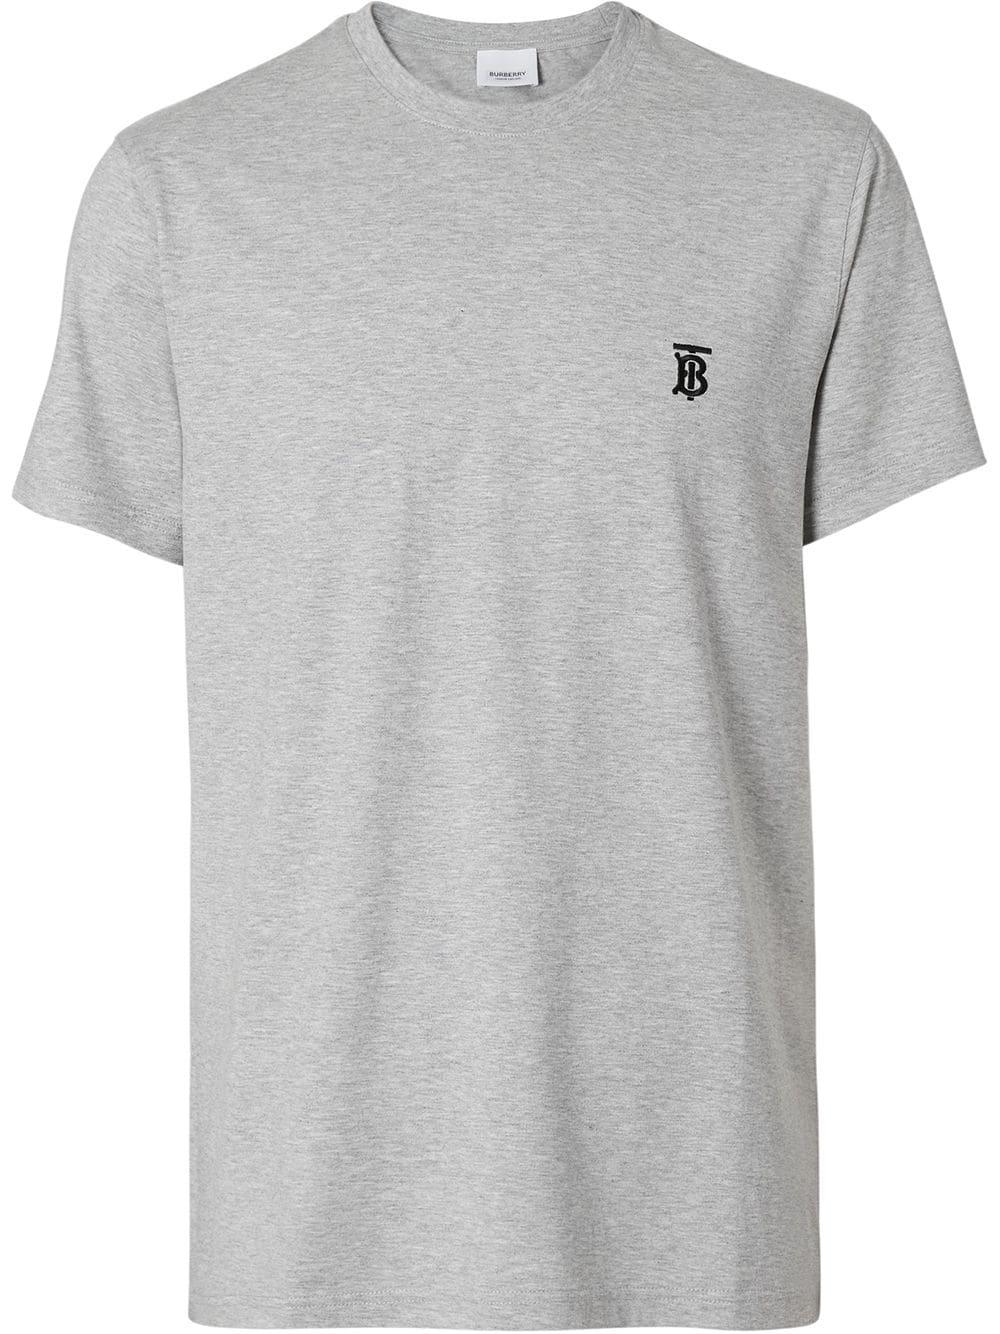 Burberry Monogram Motif Cotton T-shirt in Grey (Gray) for Men - Save 21